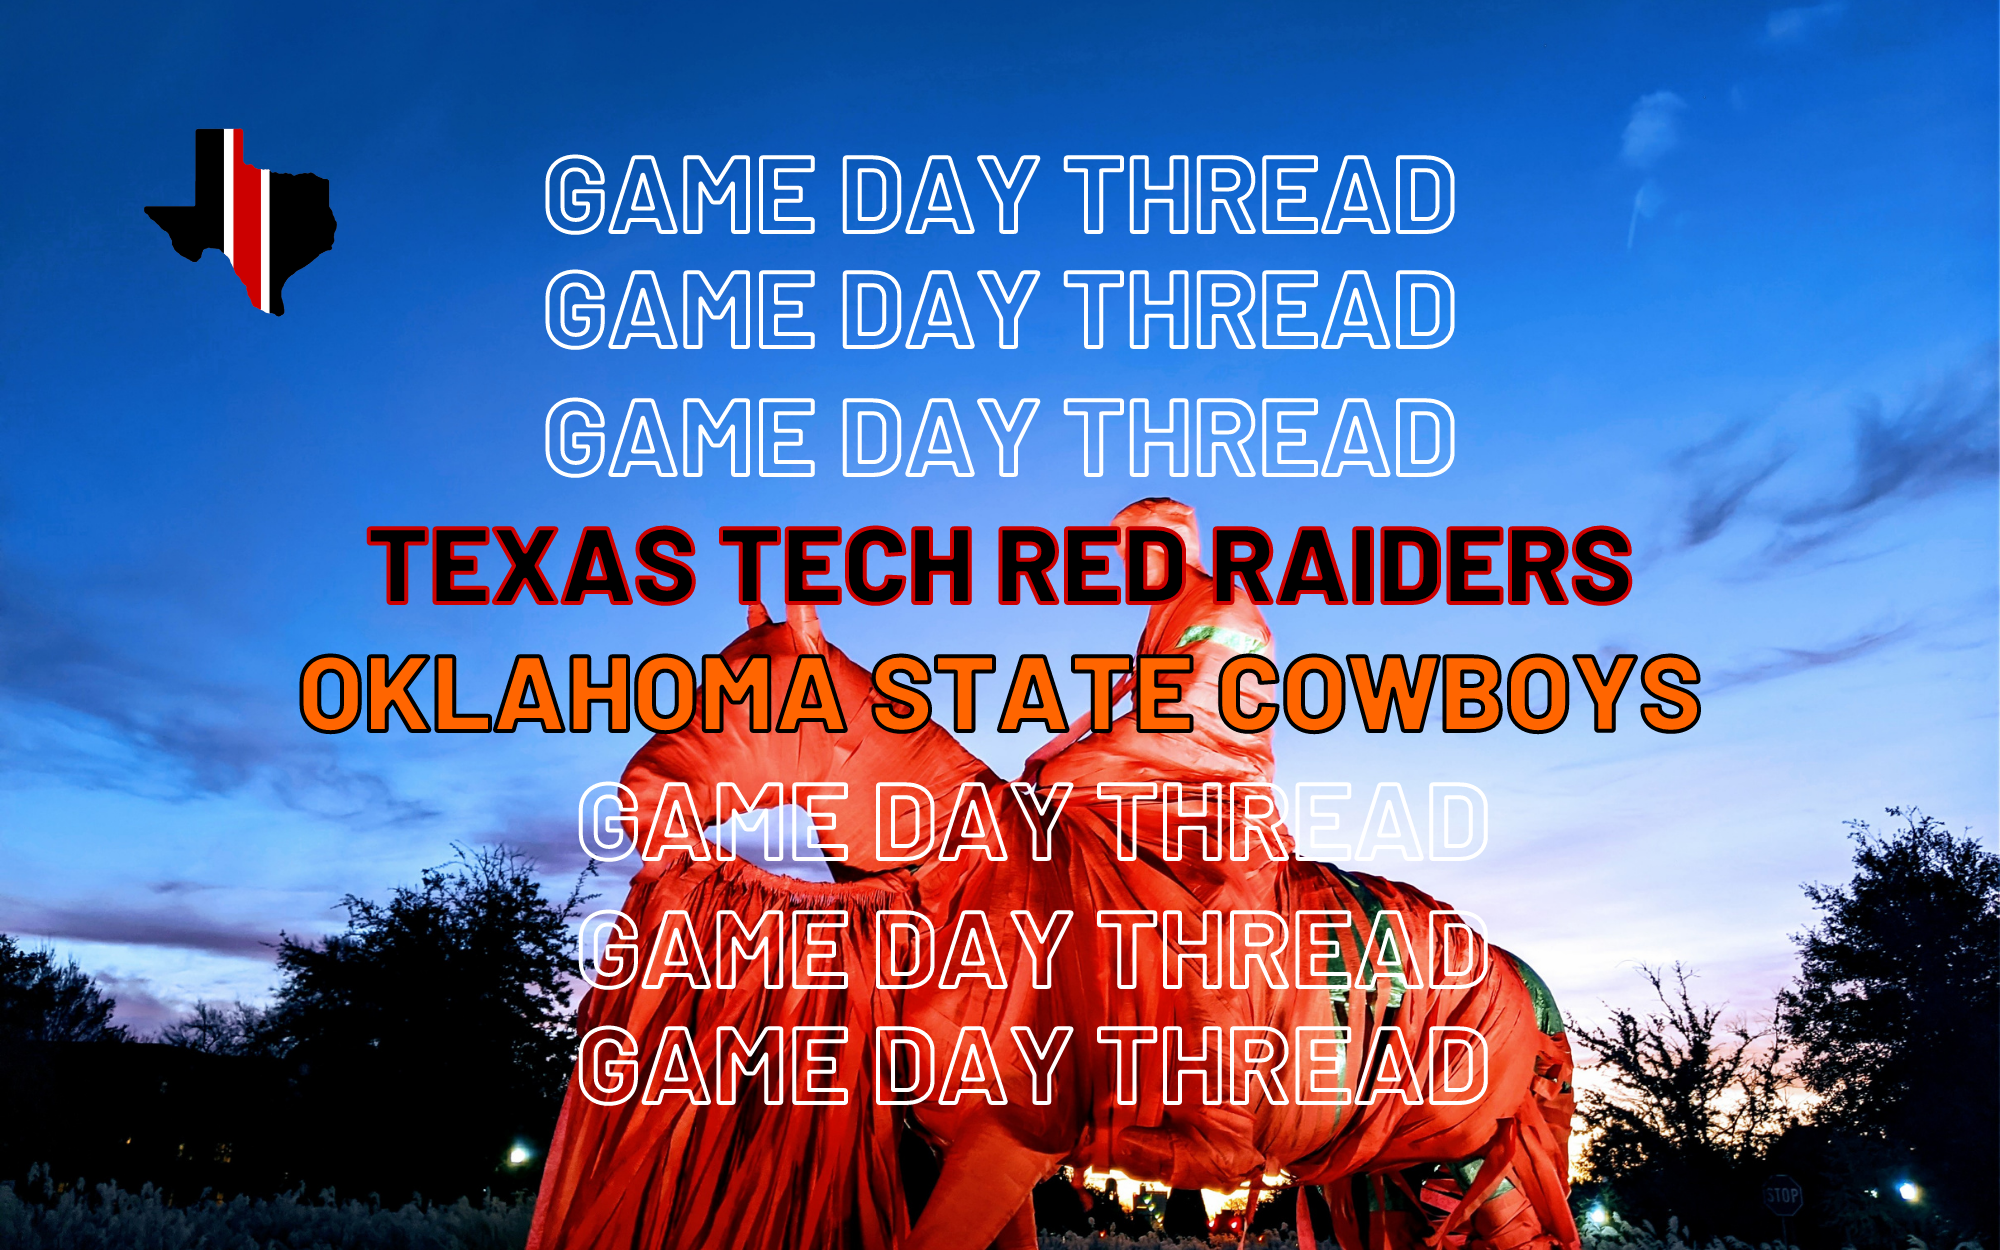 Game Day Thread 4: Texas Tech vs. Oklahoma State